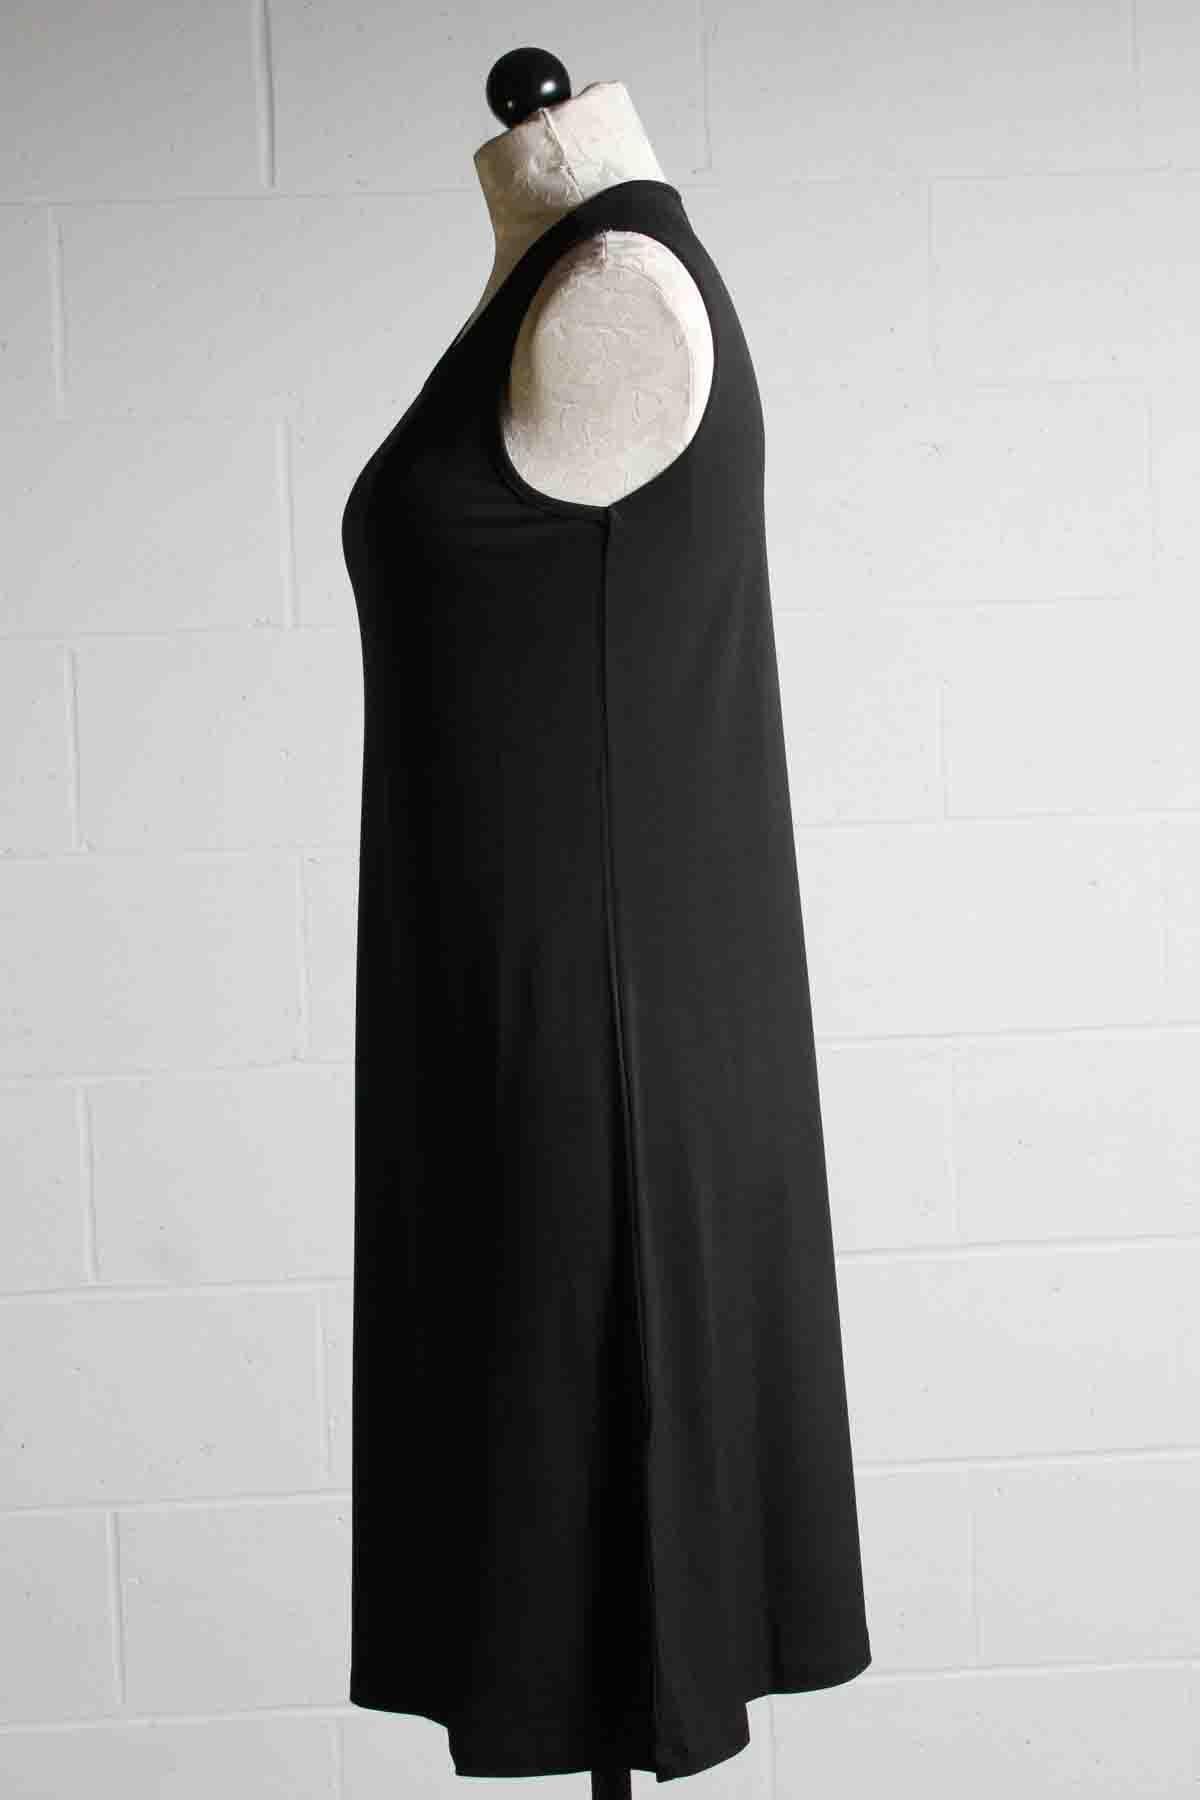 side view of Dali Dress by Kozan is a basic black tank dress